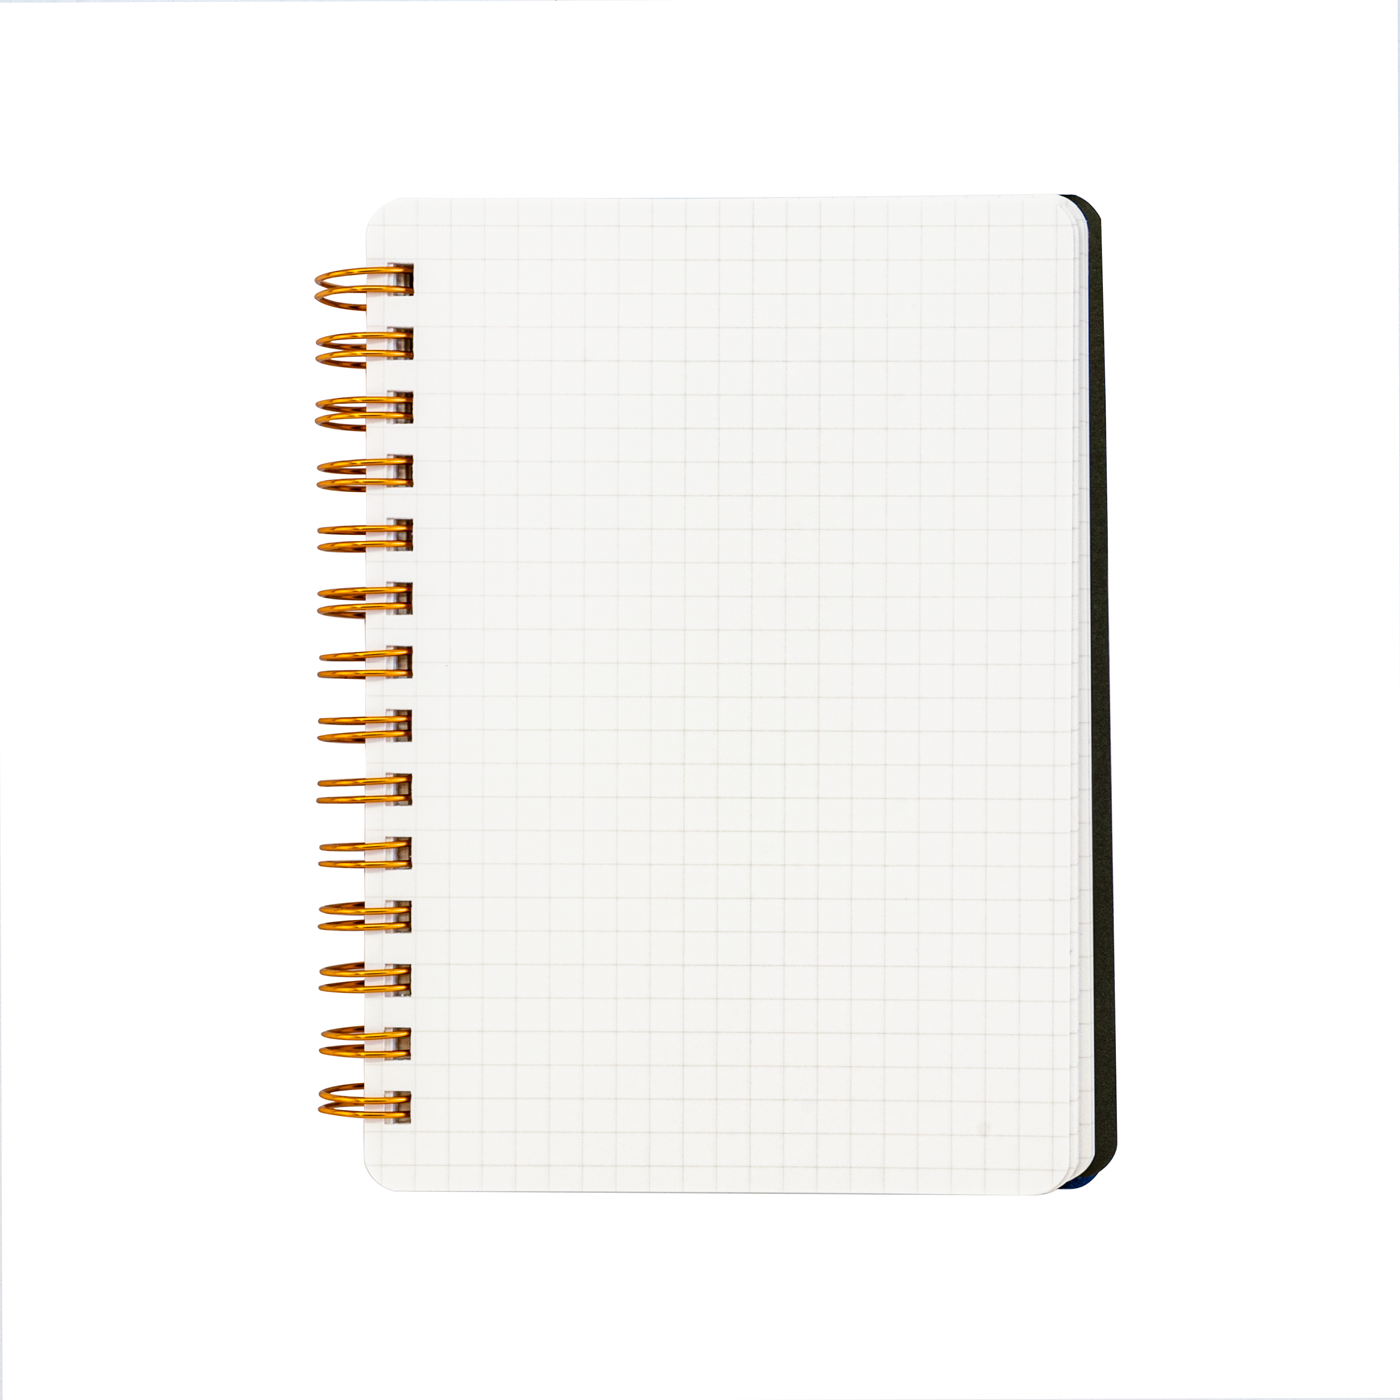 Life Stationery A6 Spiral Pocket Notebook 5mm Grid - Navy